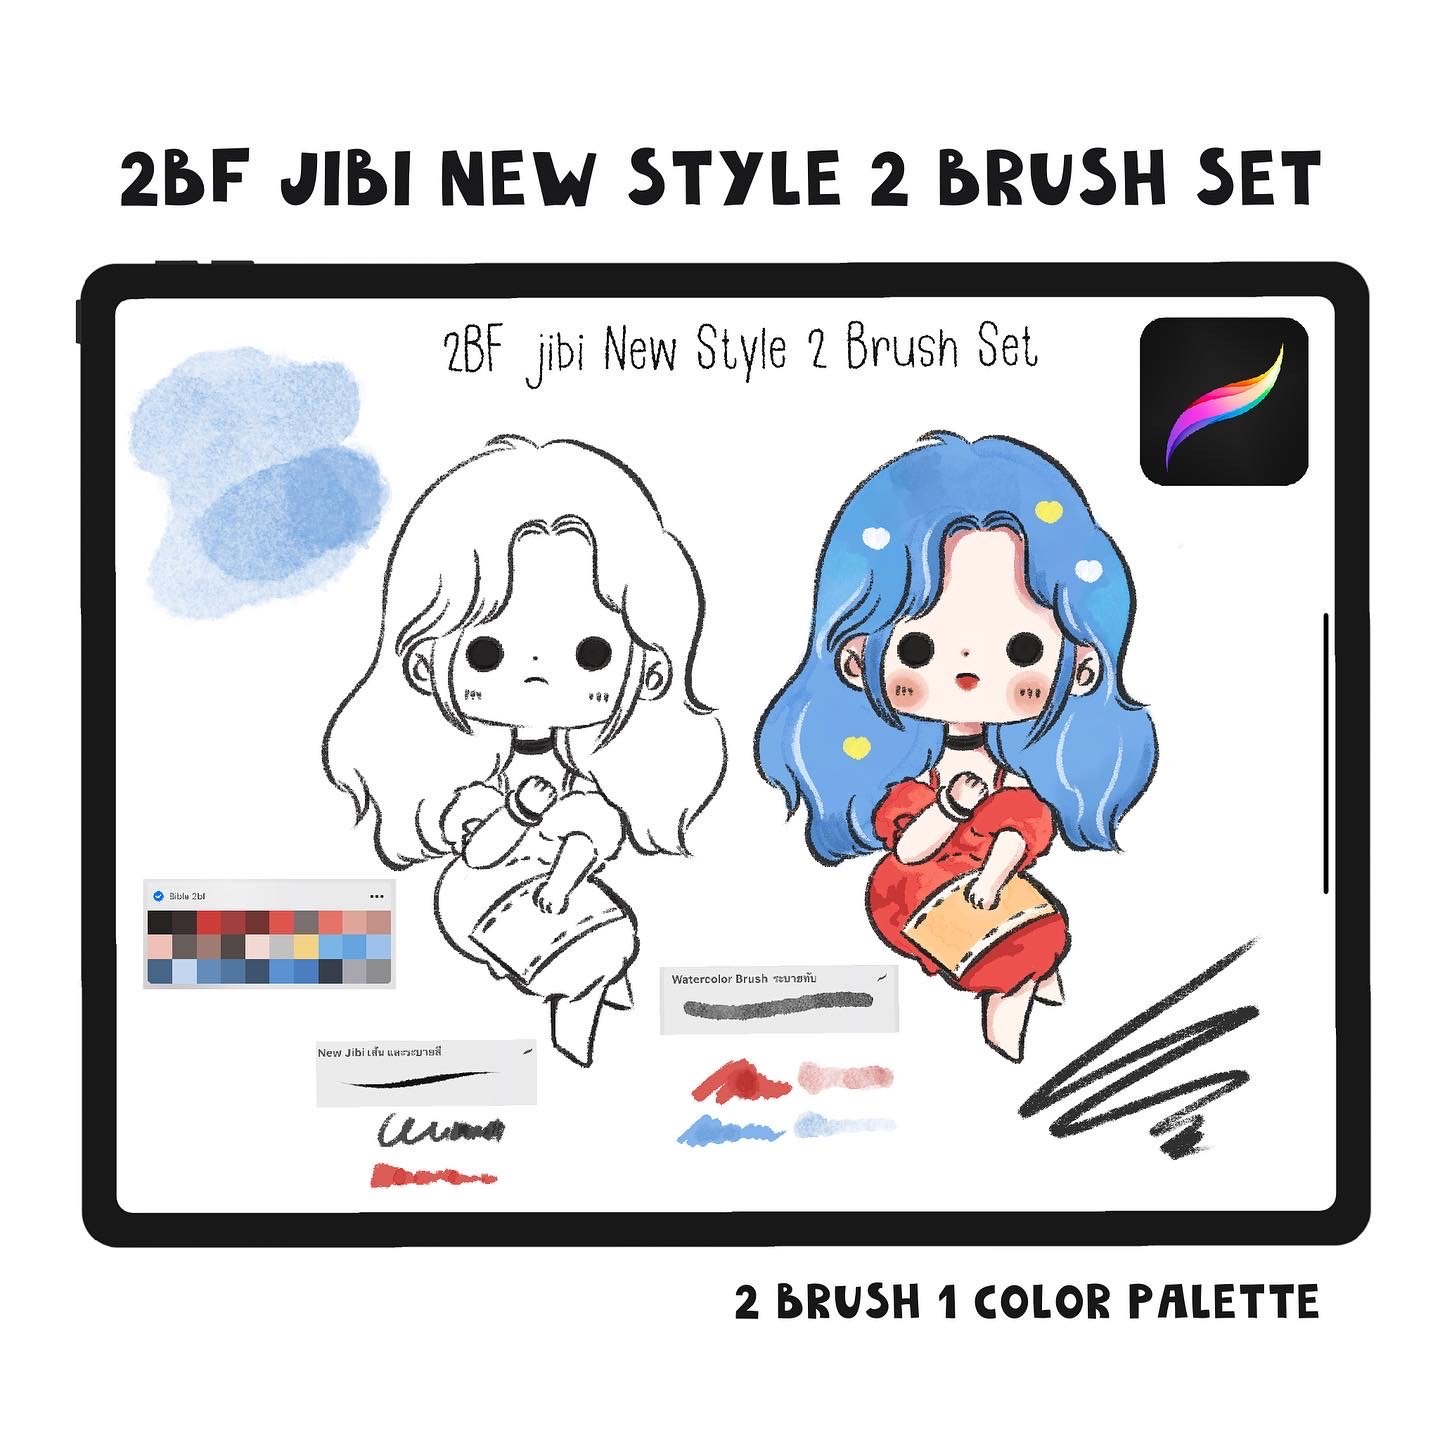 2BF jibi New Style 2 Brush Set